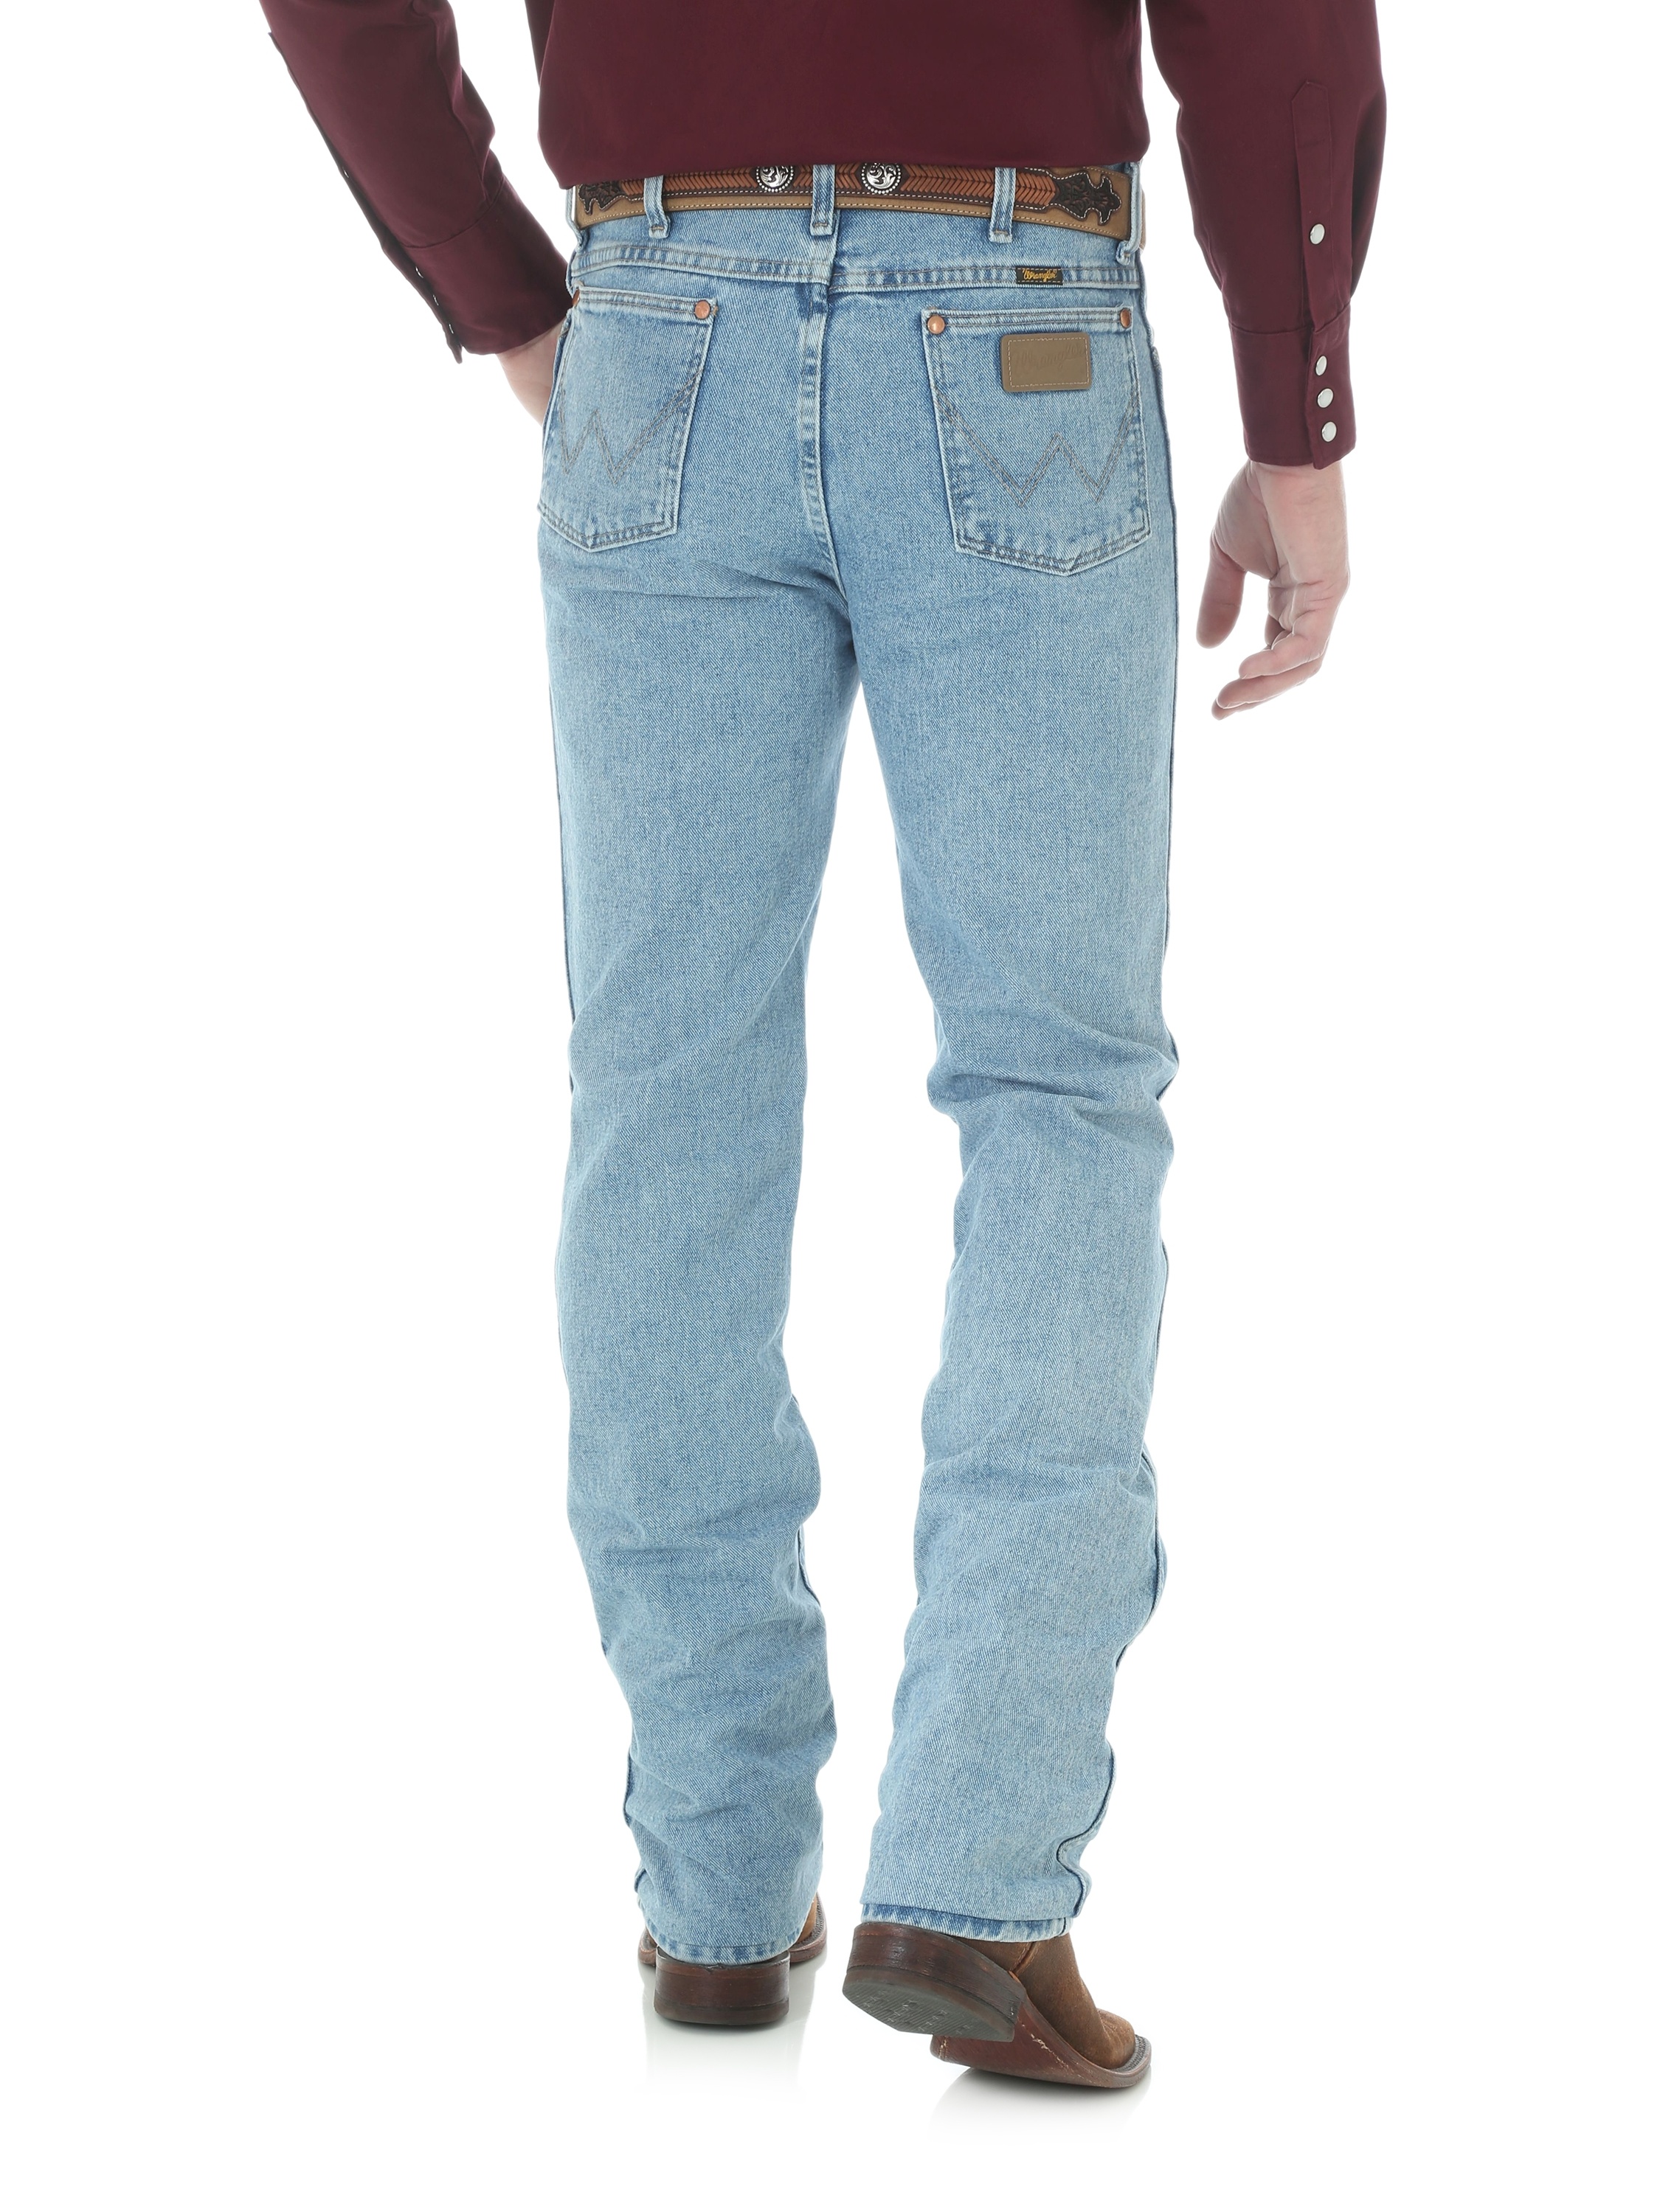 Wrangler Men's Western Cowboy Cut Slim Fit Jean - Antique Wash - image 3 of 3